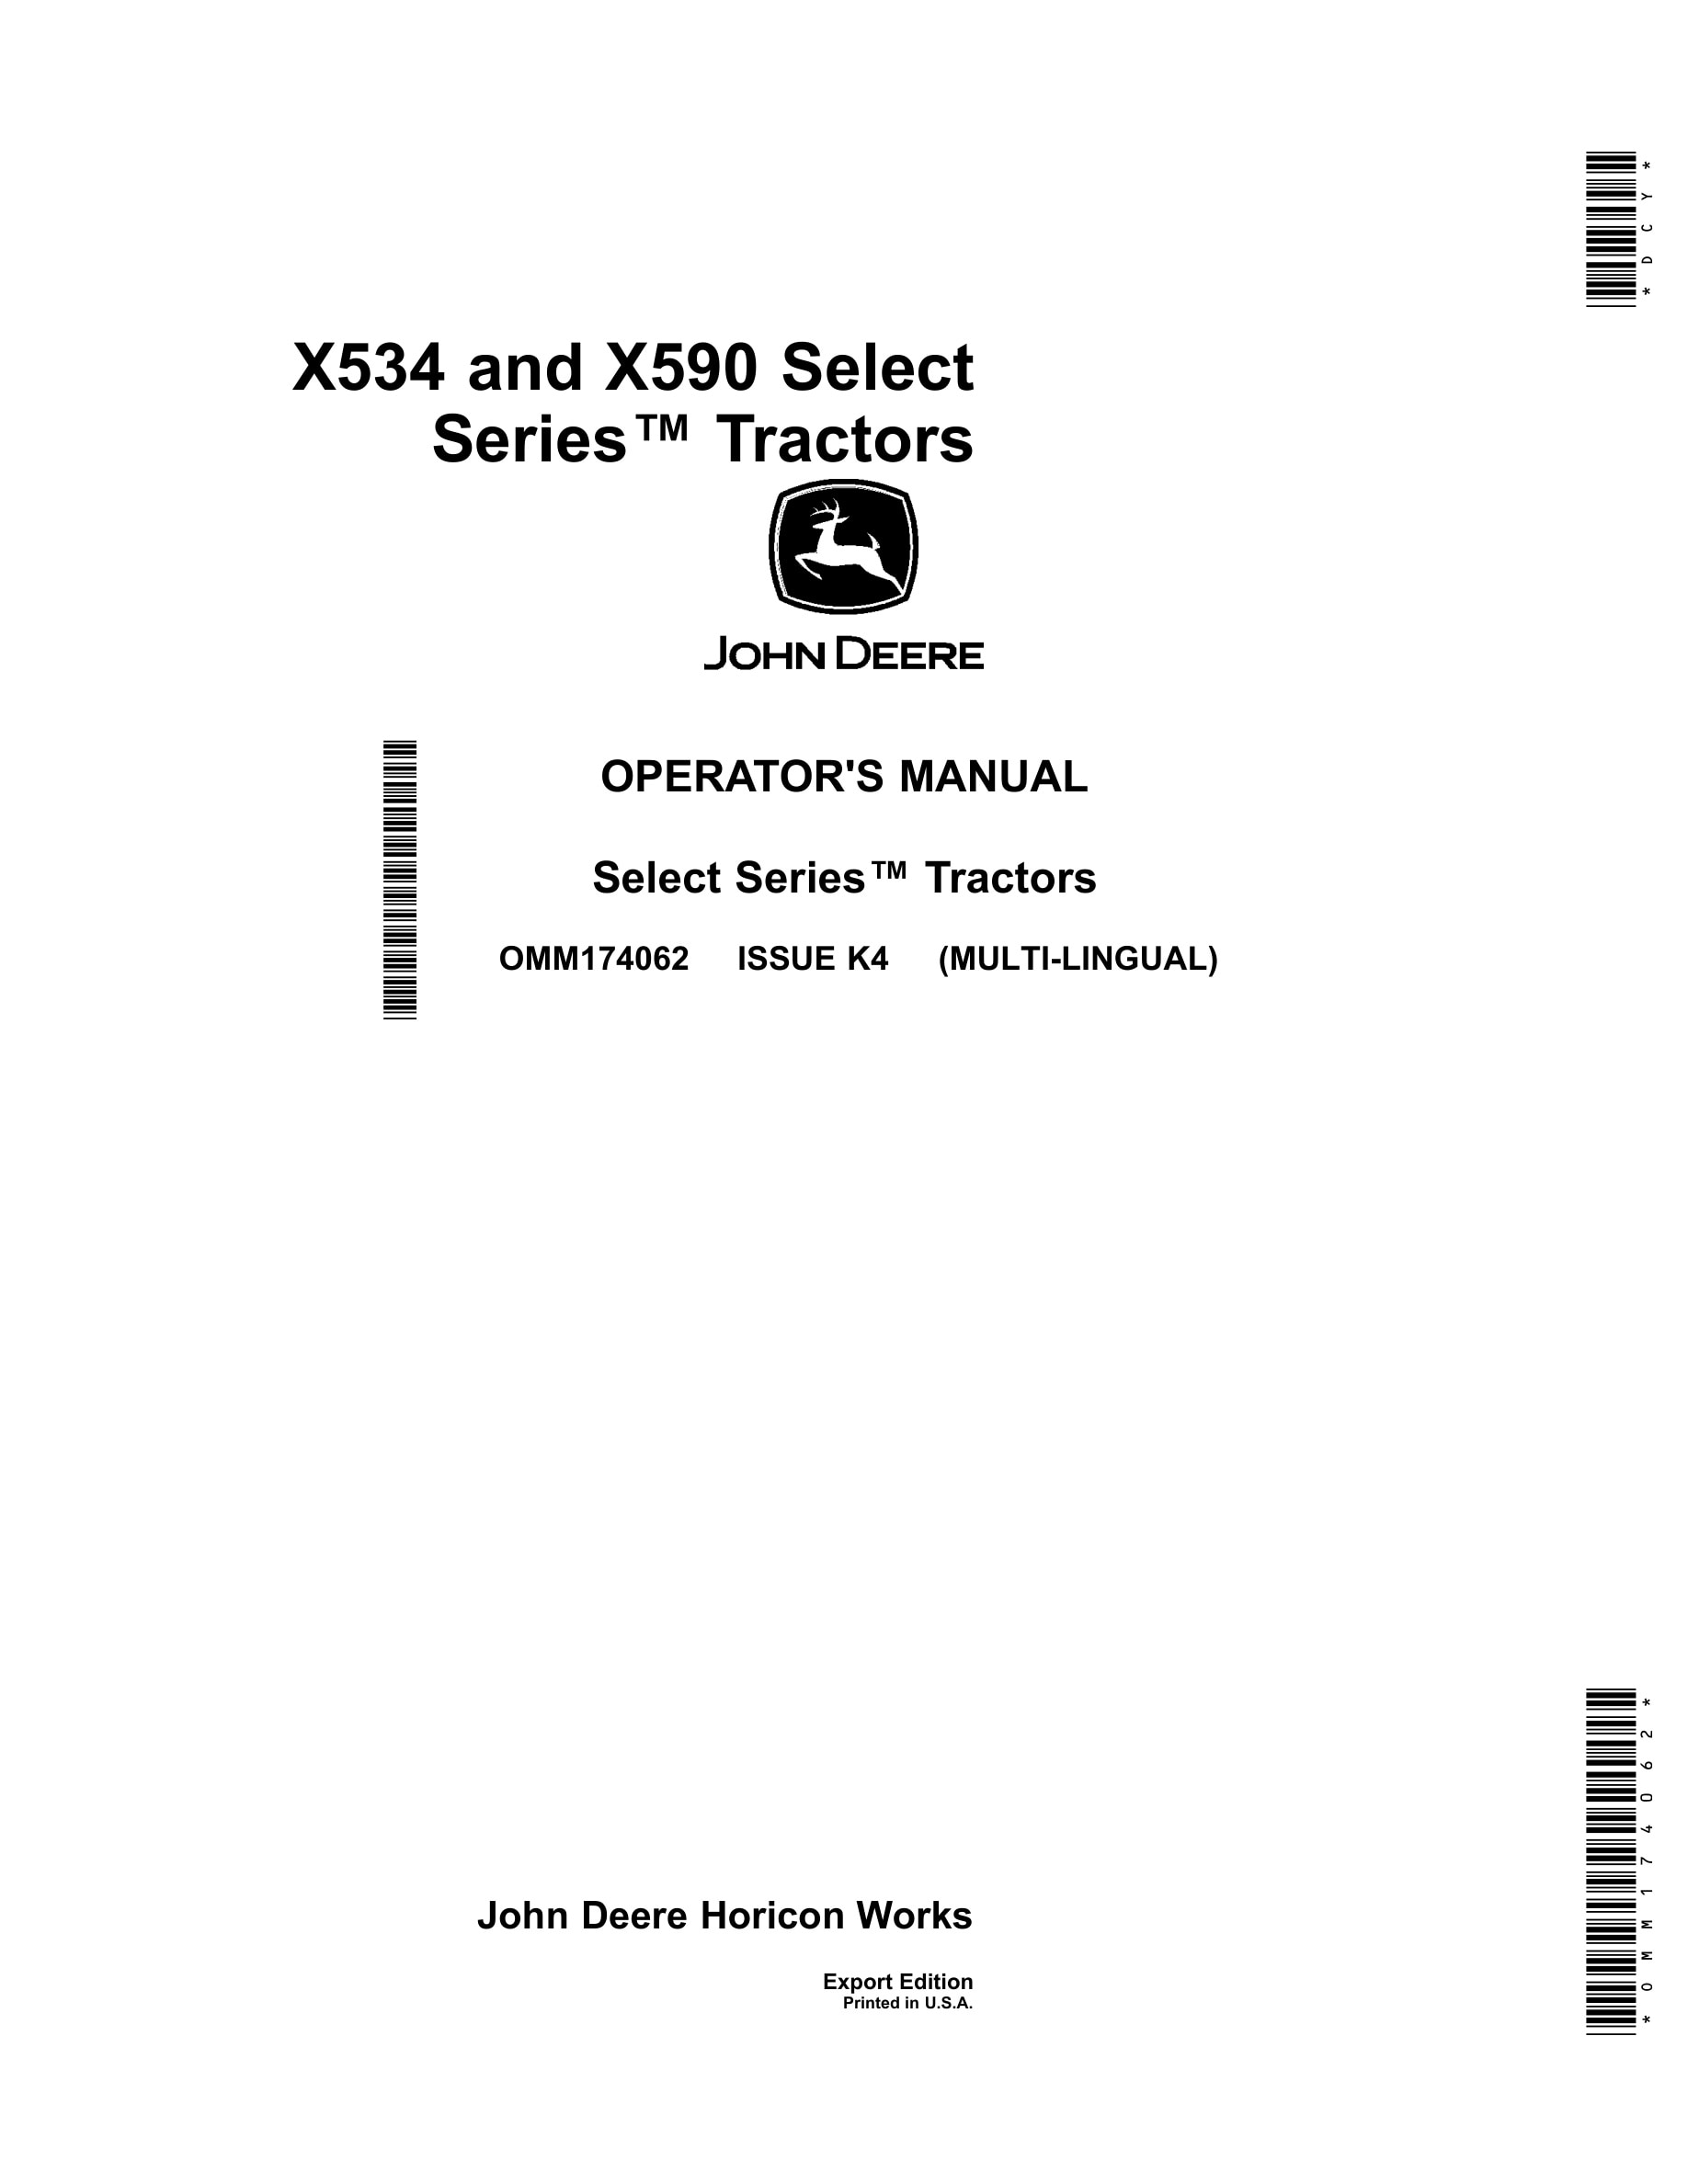 John Deere X534 And X590 Select Series Tractors Operator Manuals OMM174062-1